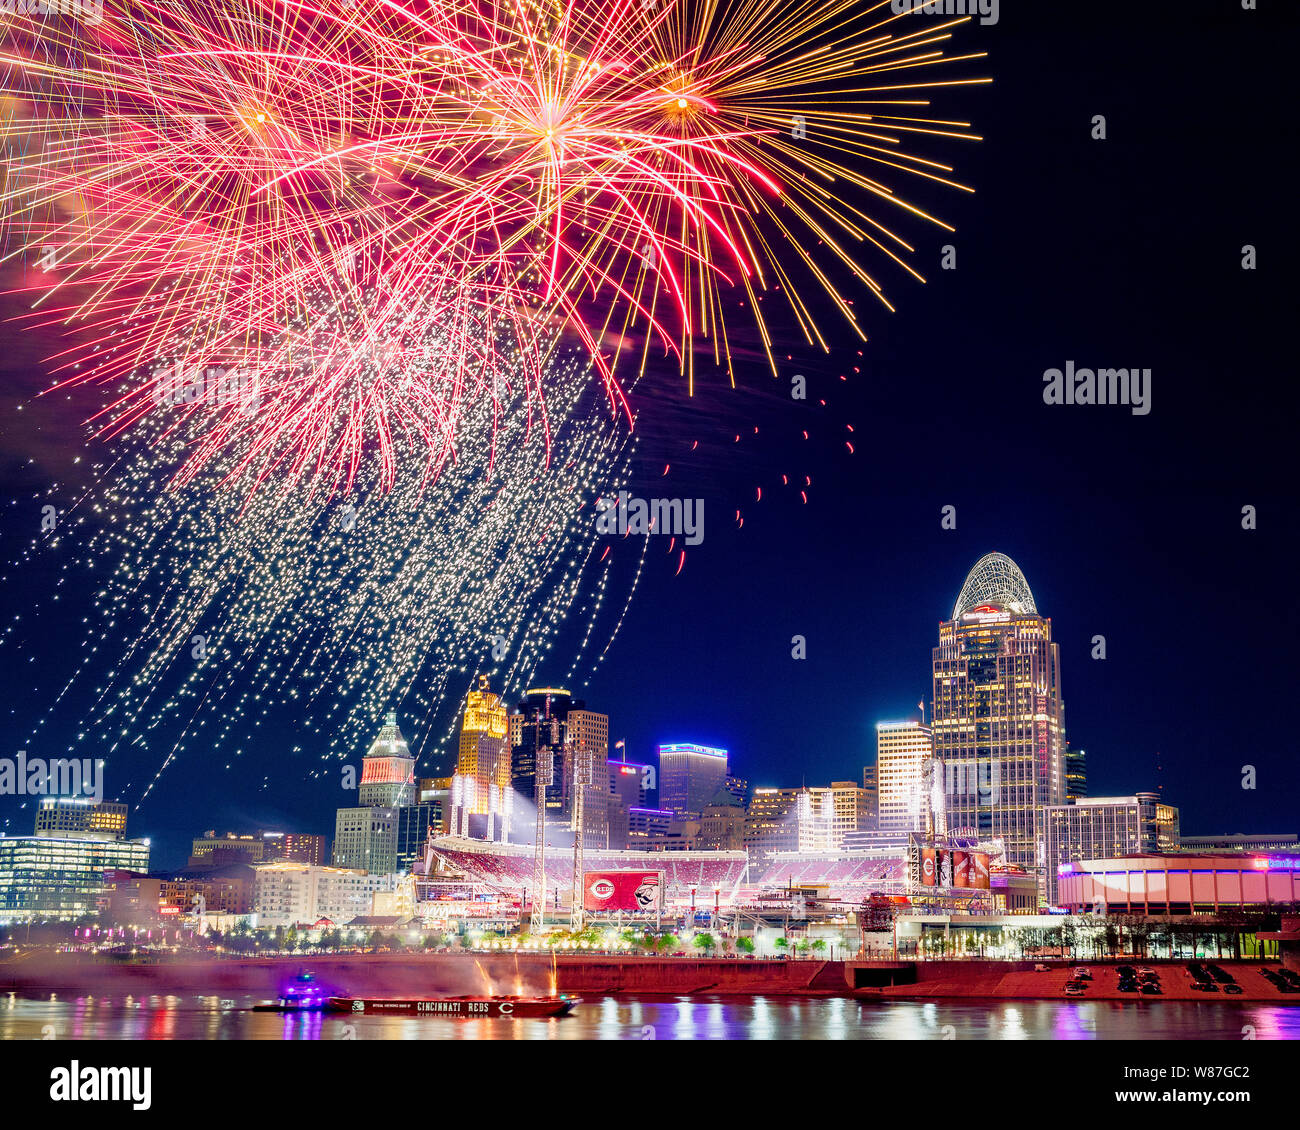 Image taken during a fireworks display in Cincinnati, Ohio. Stock Photo